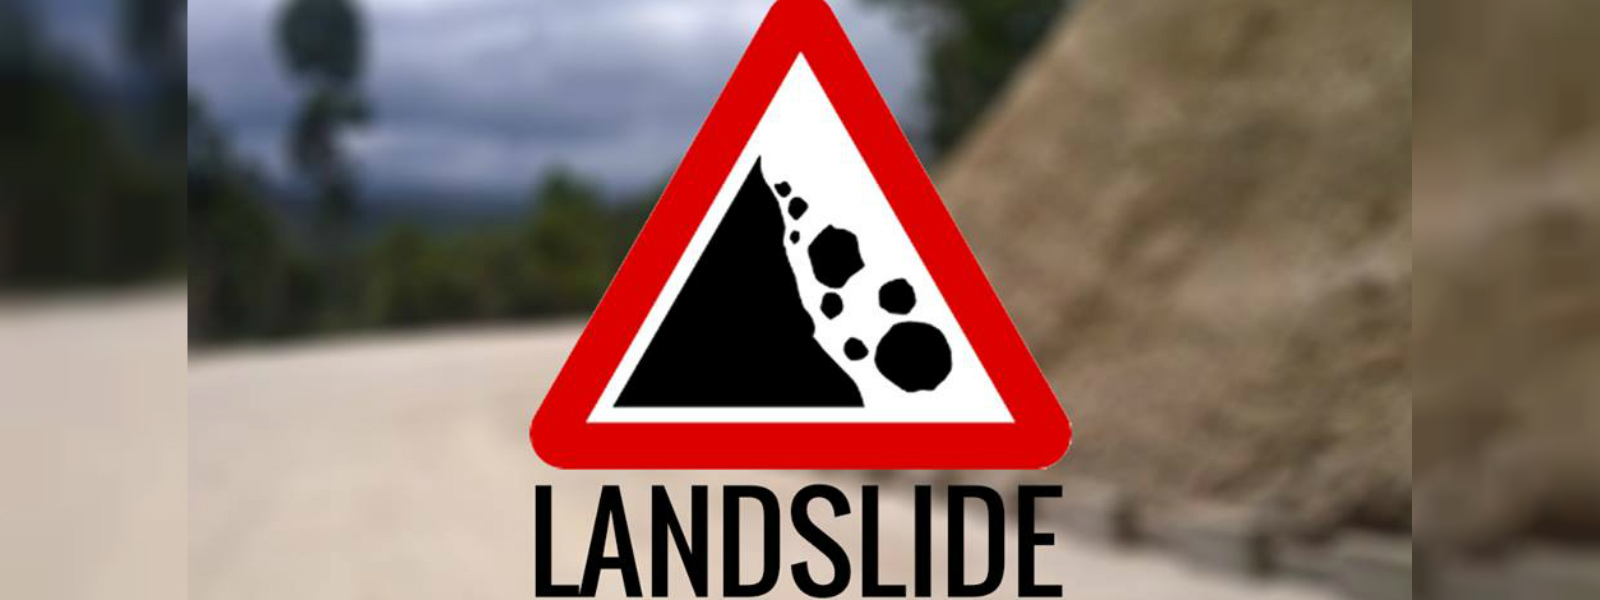 NBRO extends landslide warnings